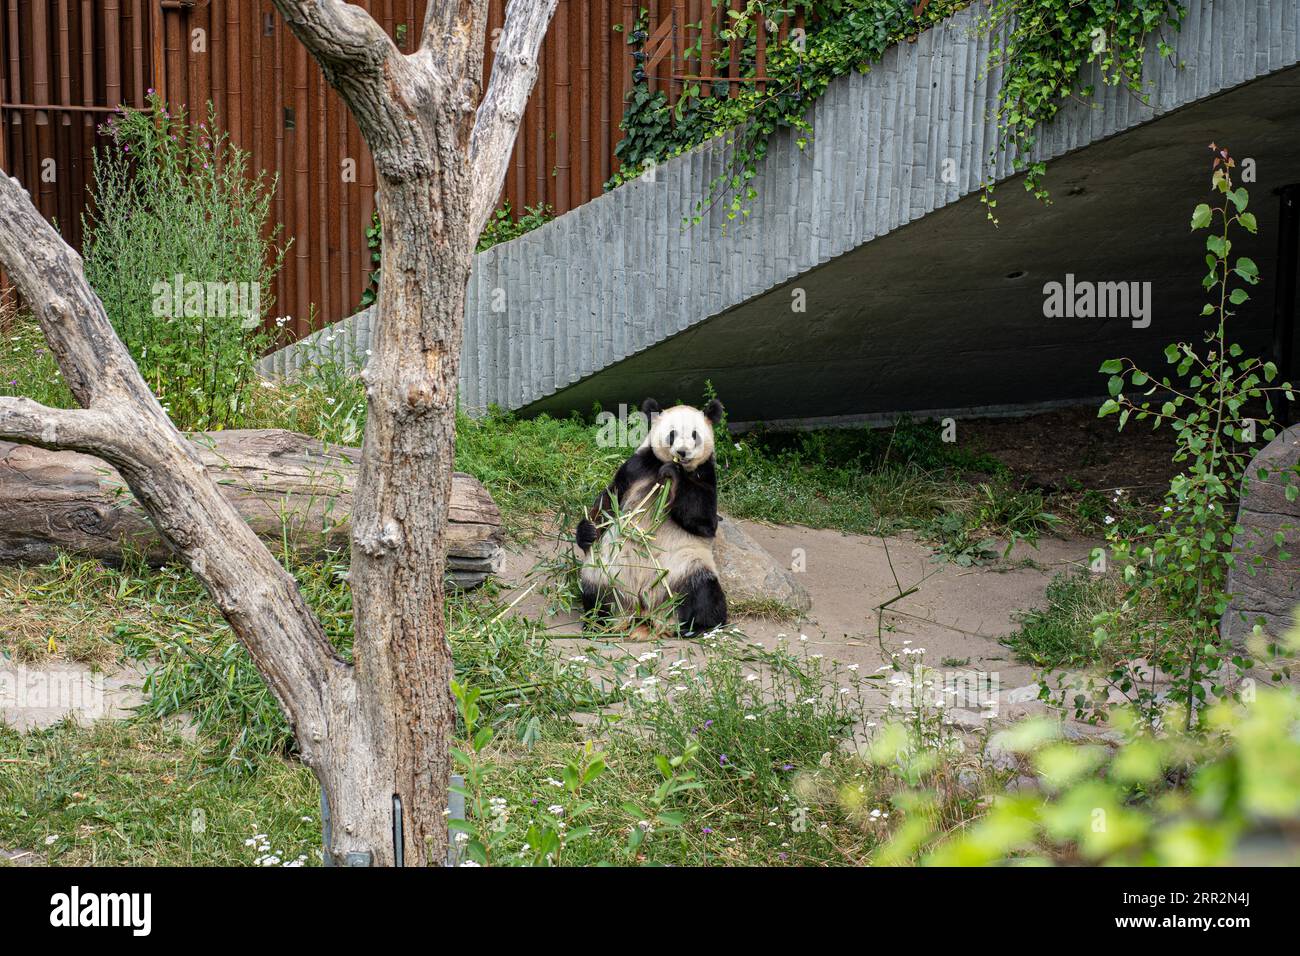 Copenhagen, Denmark, July 16, 2022: A panda eating bambus in the outdoor area in Copenhagen Zoo Stock Photo